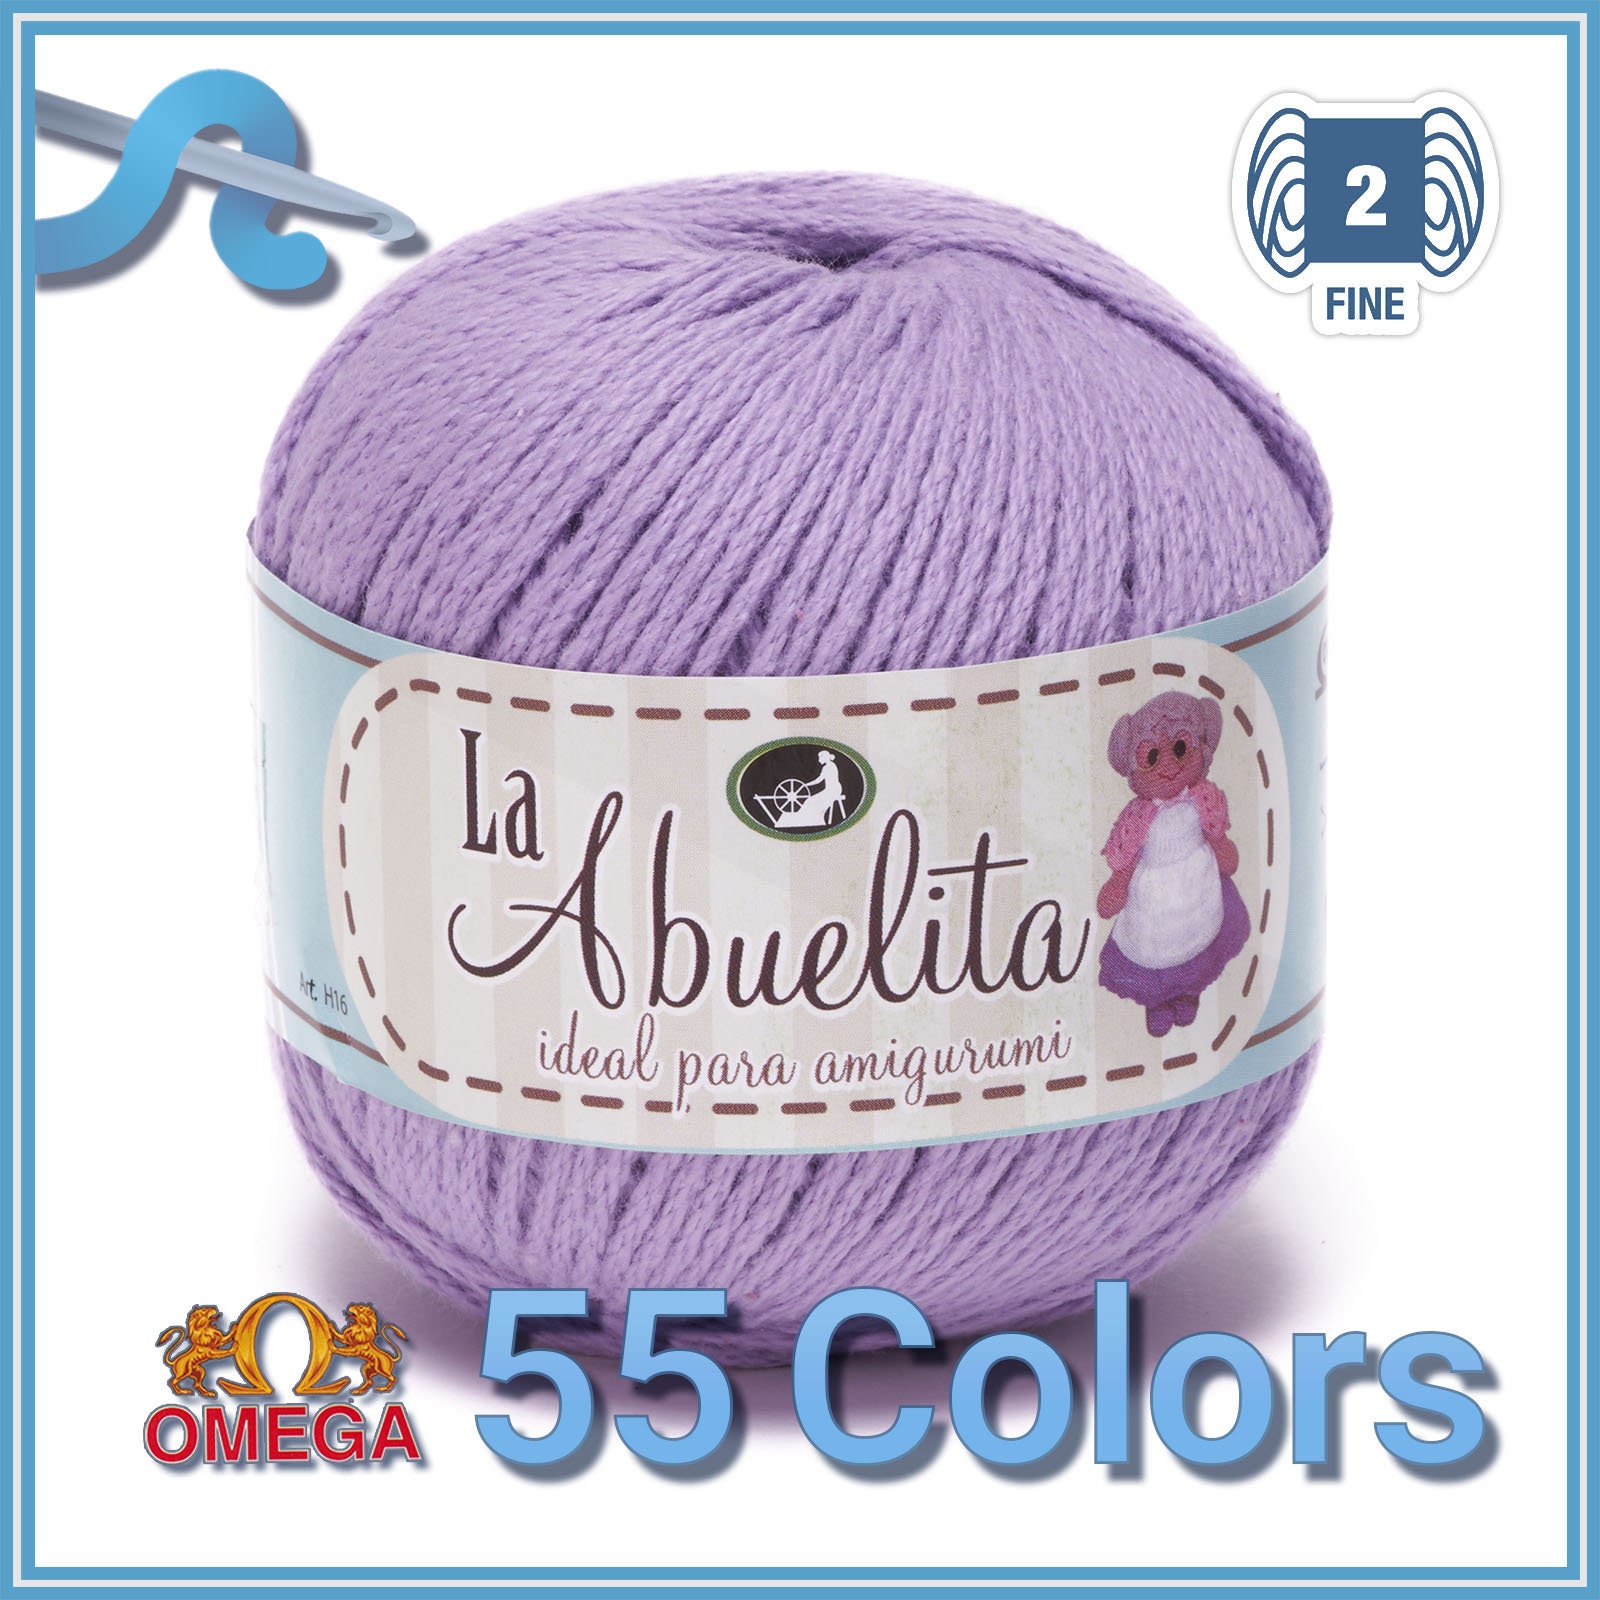 Abuela No.6,Cotton Omega 100% Mercerized Cotton Yarn, Cotton Abuela Thread  Soft